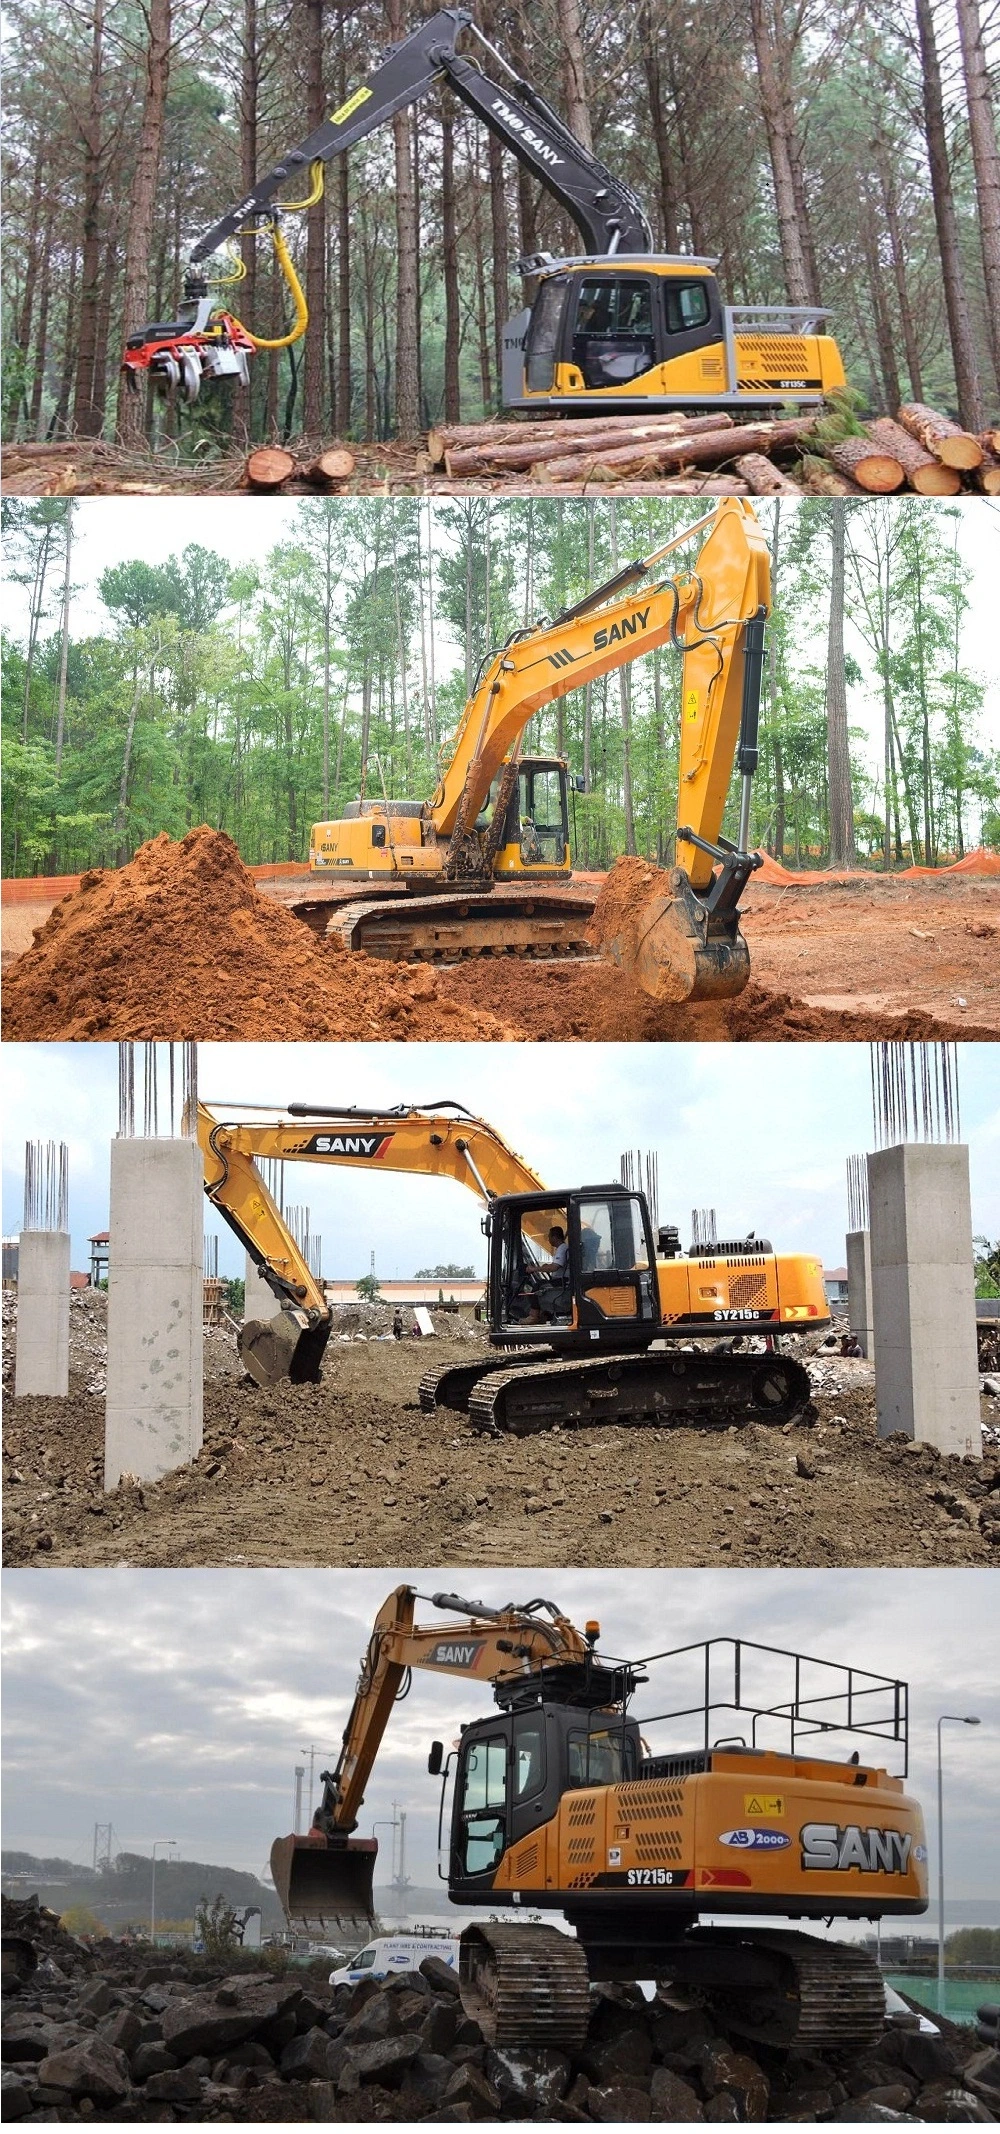 Sany Digging Equipment 20 Ton Excavator Sy215c New Excavator Price in Indian Rupees